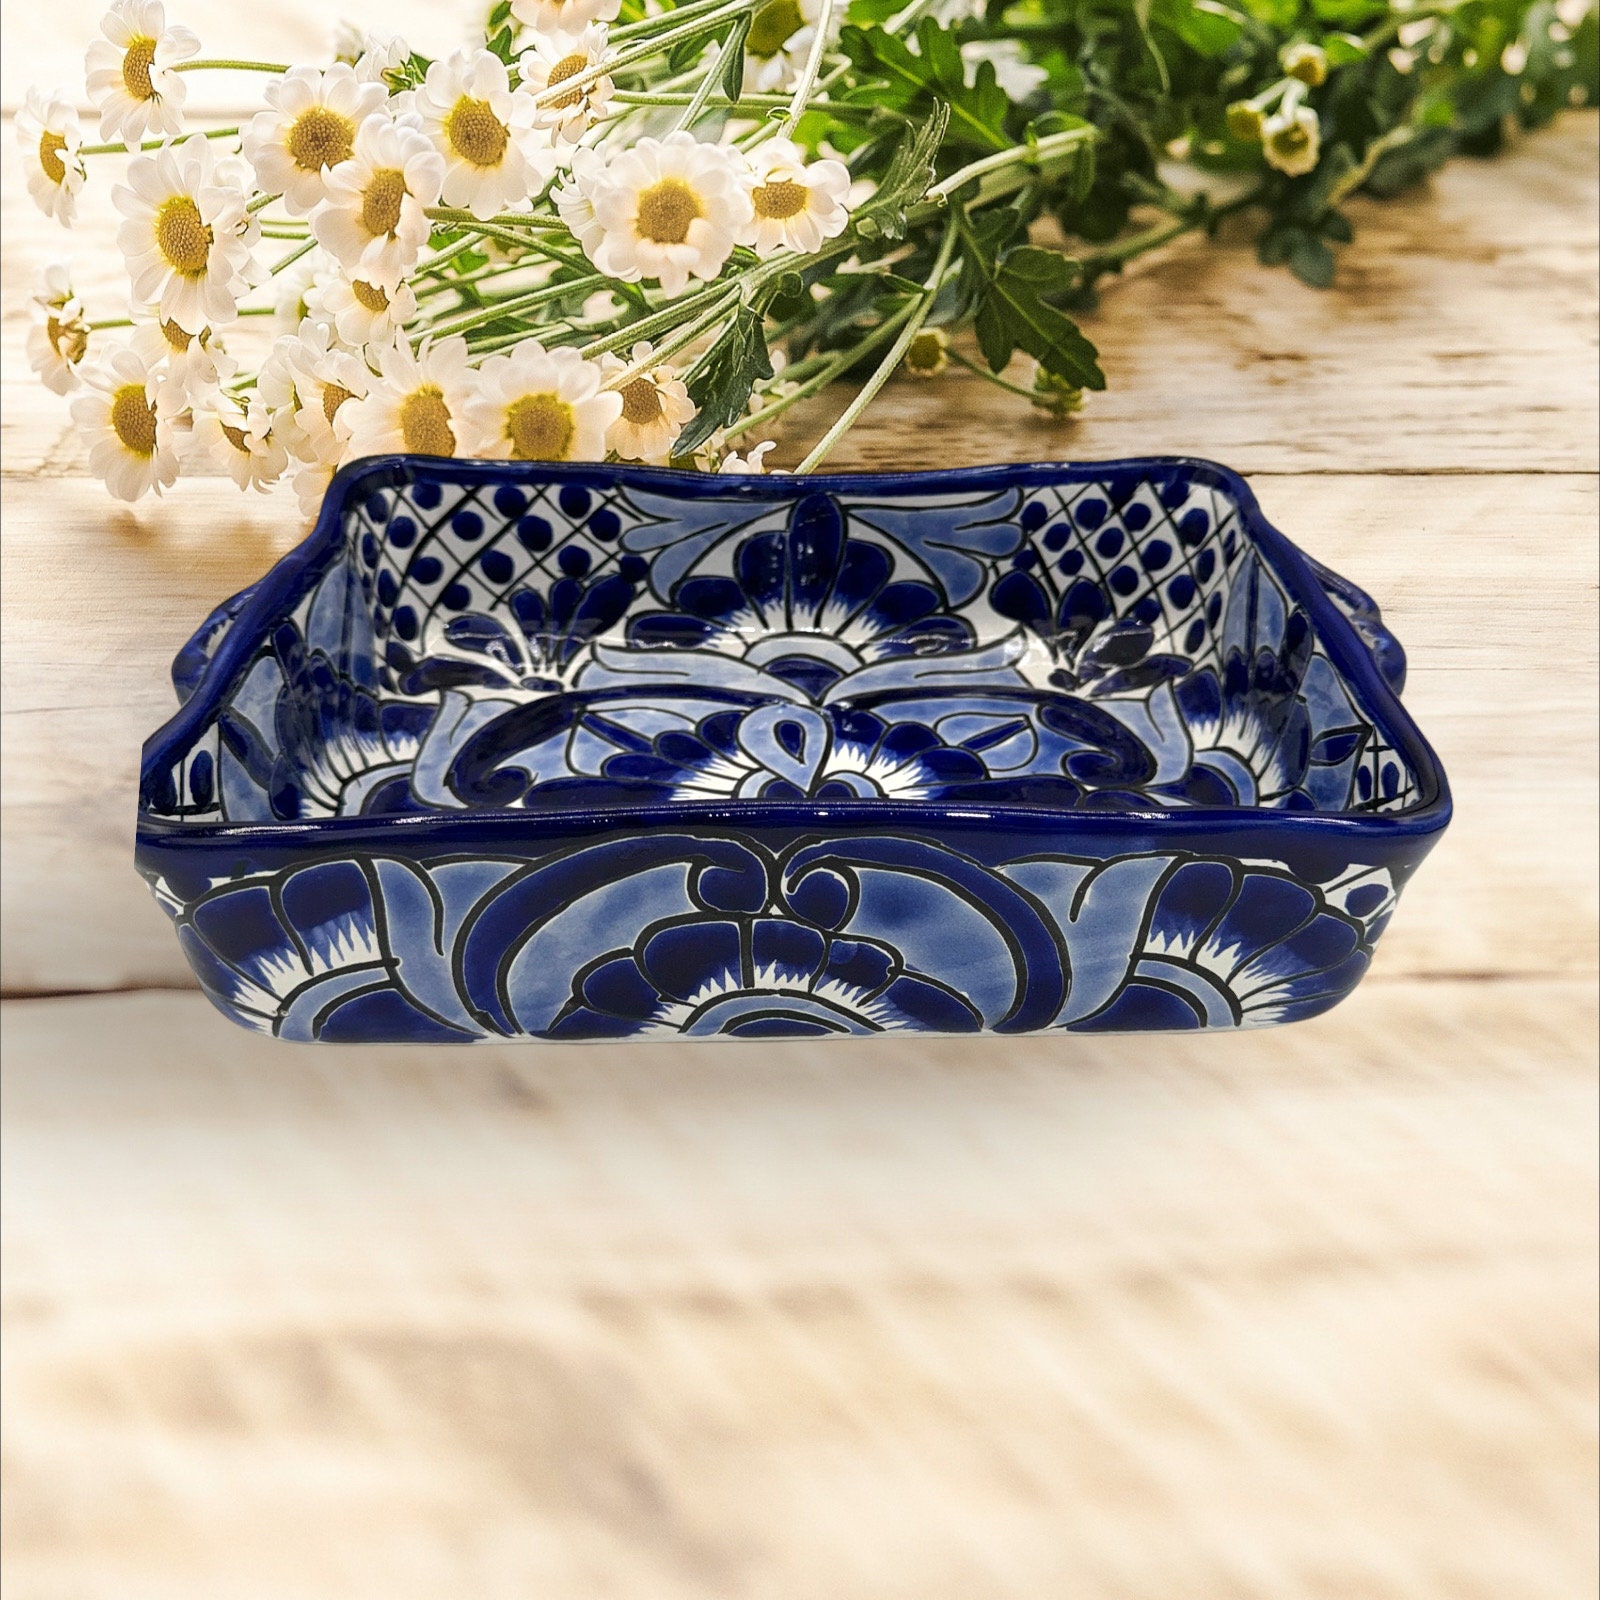 Staub Ceramic - Rectangular Baking Dishes/ Gratins 10.5-X 7.5 inch, Rectangular, Dish, Rustic Turquoise